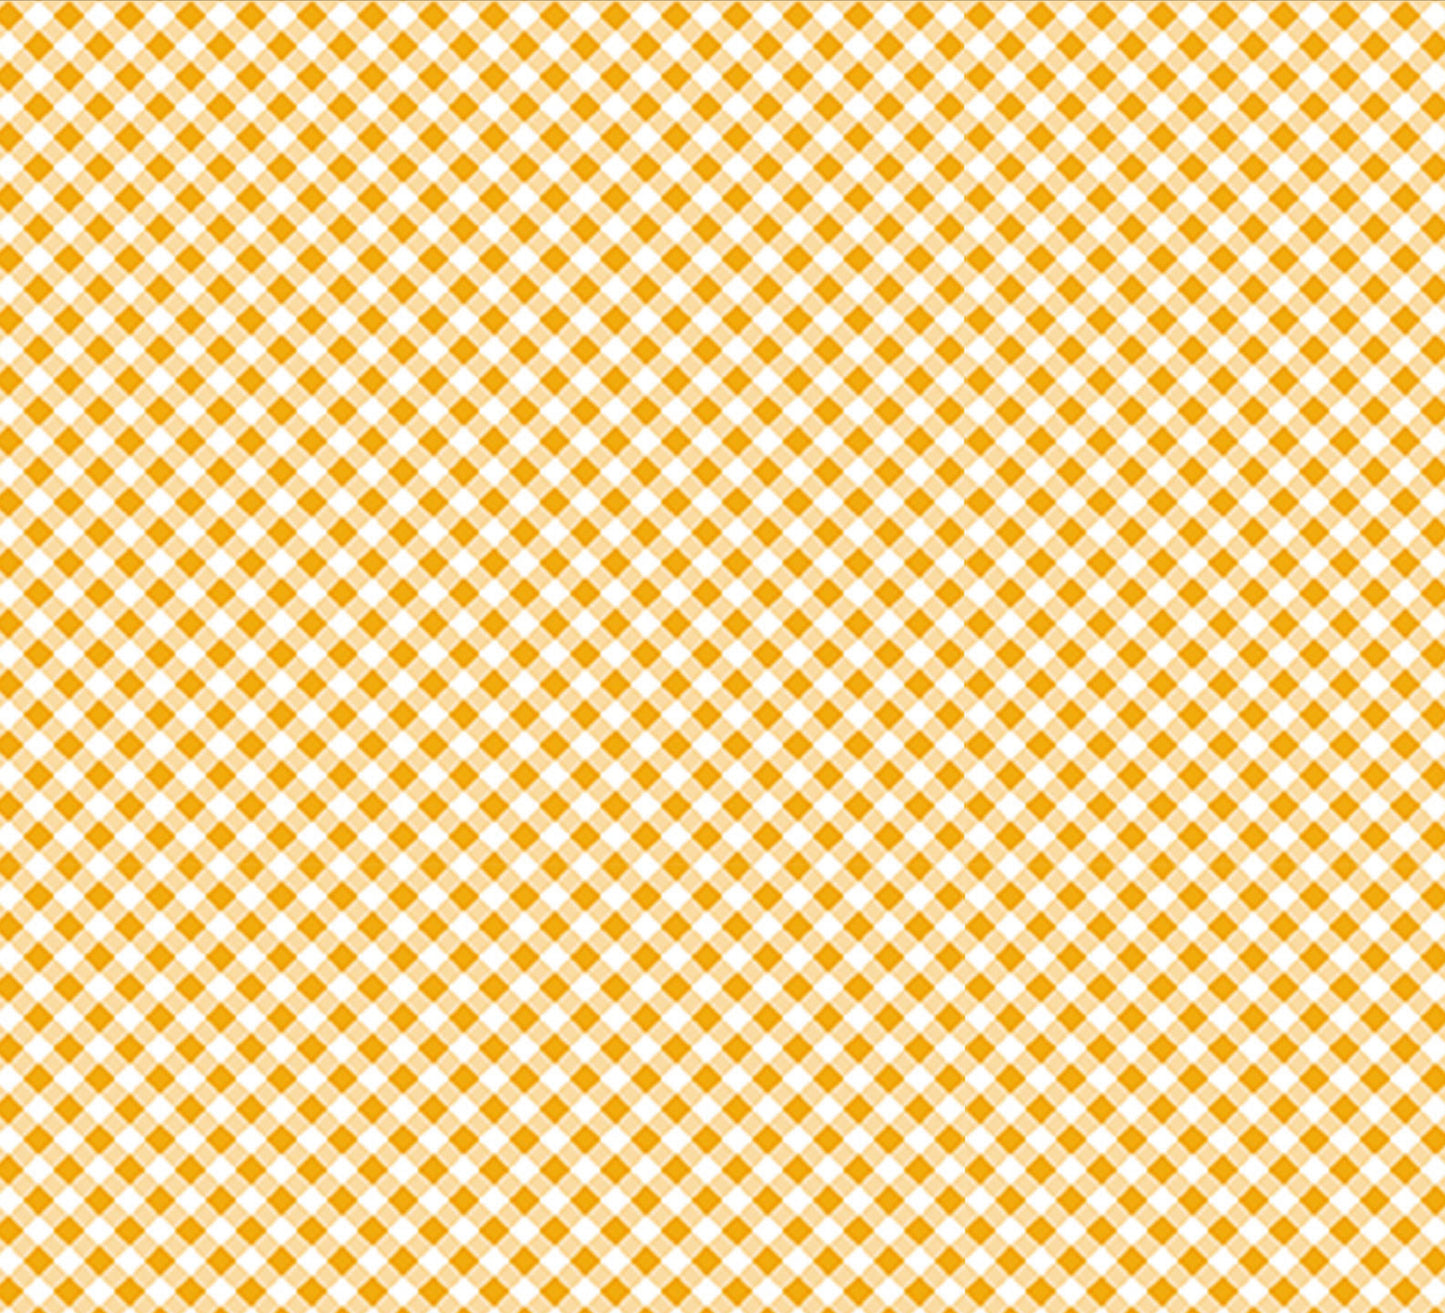 LEAP FROG - Diagonal Gingham DK Gold - by Anita Jarem, 100% Cotton, Toad Hollow Fabrics